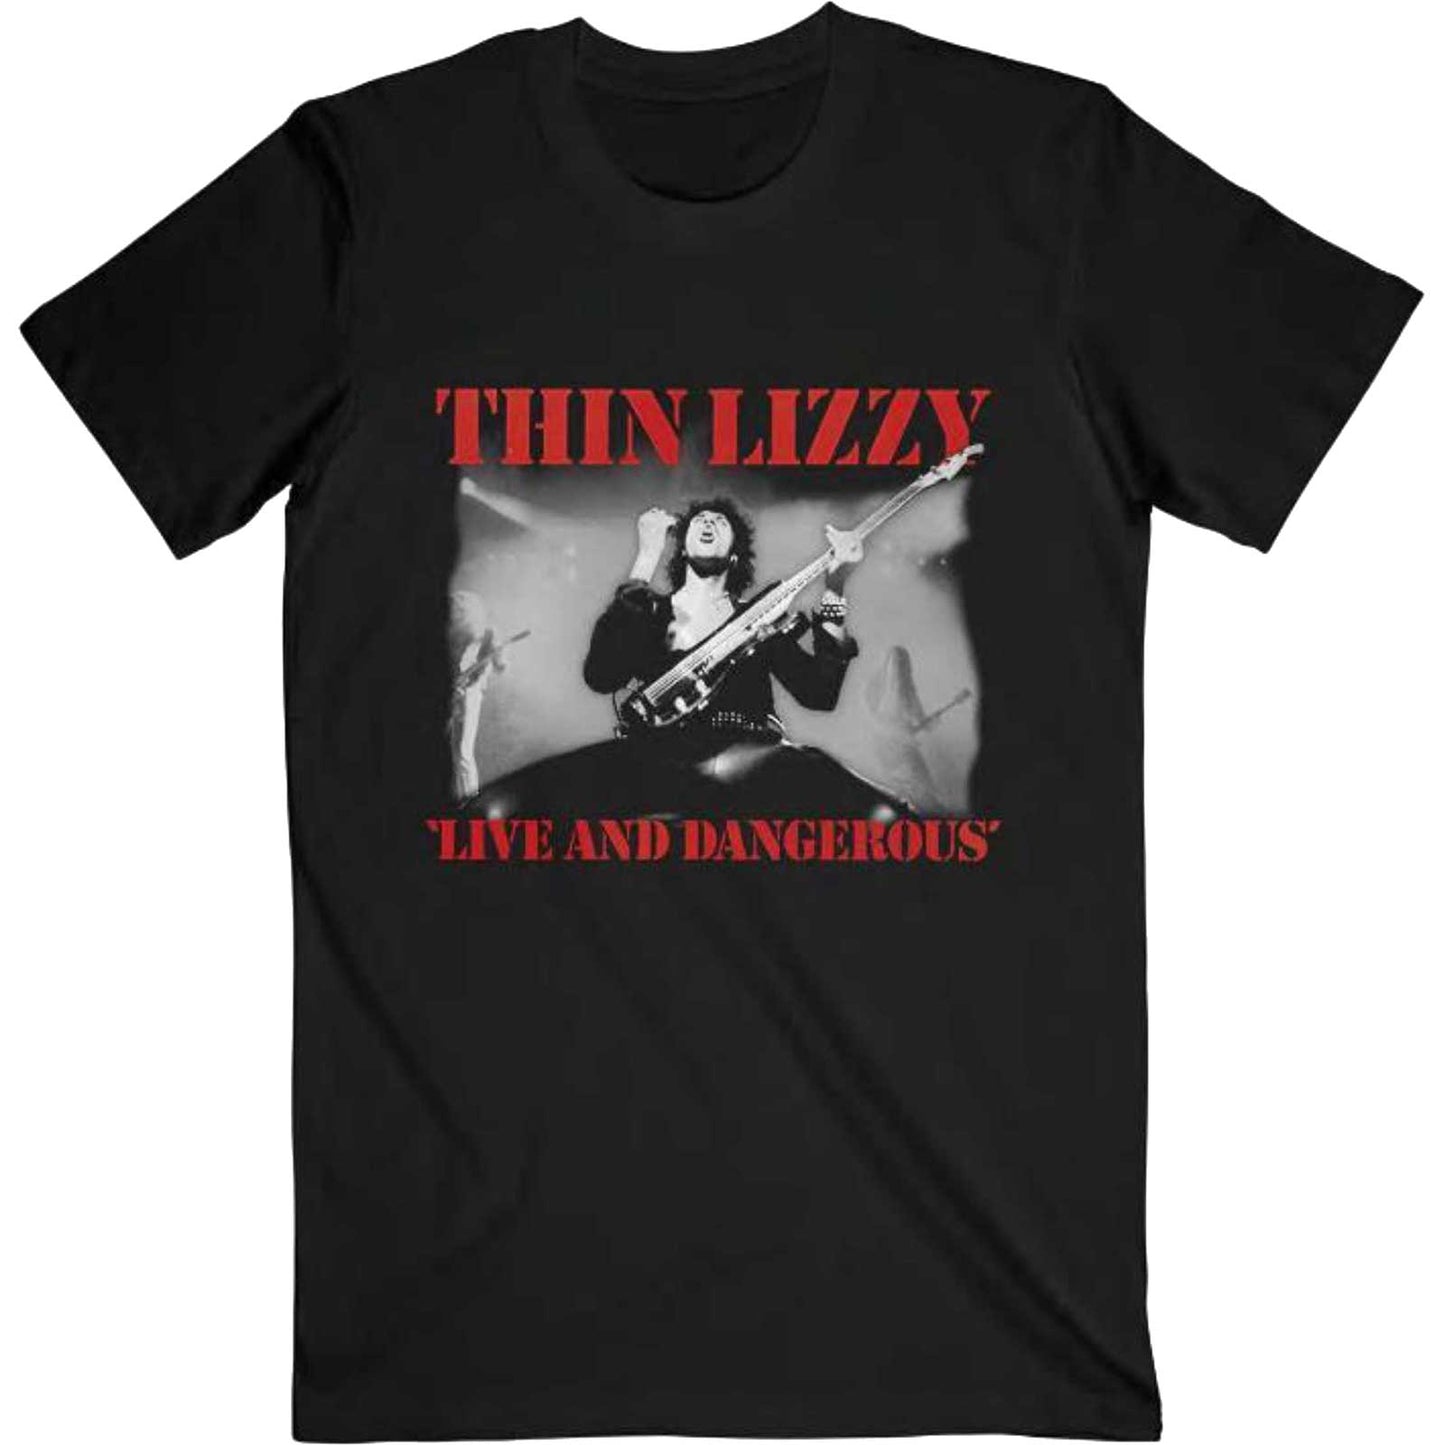 thin lizzy live shirt ireland dangerous